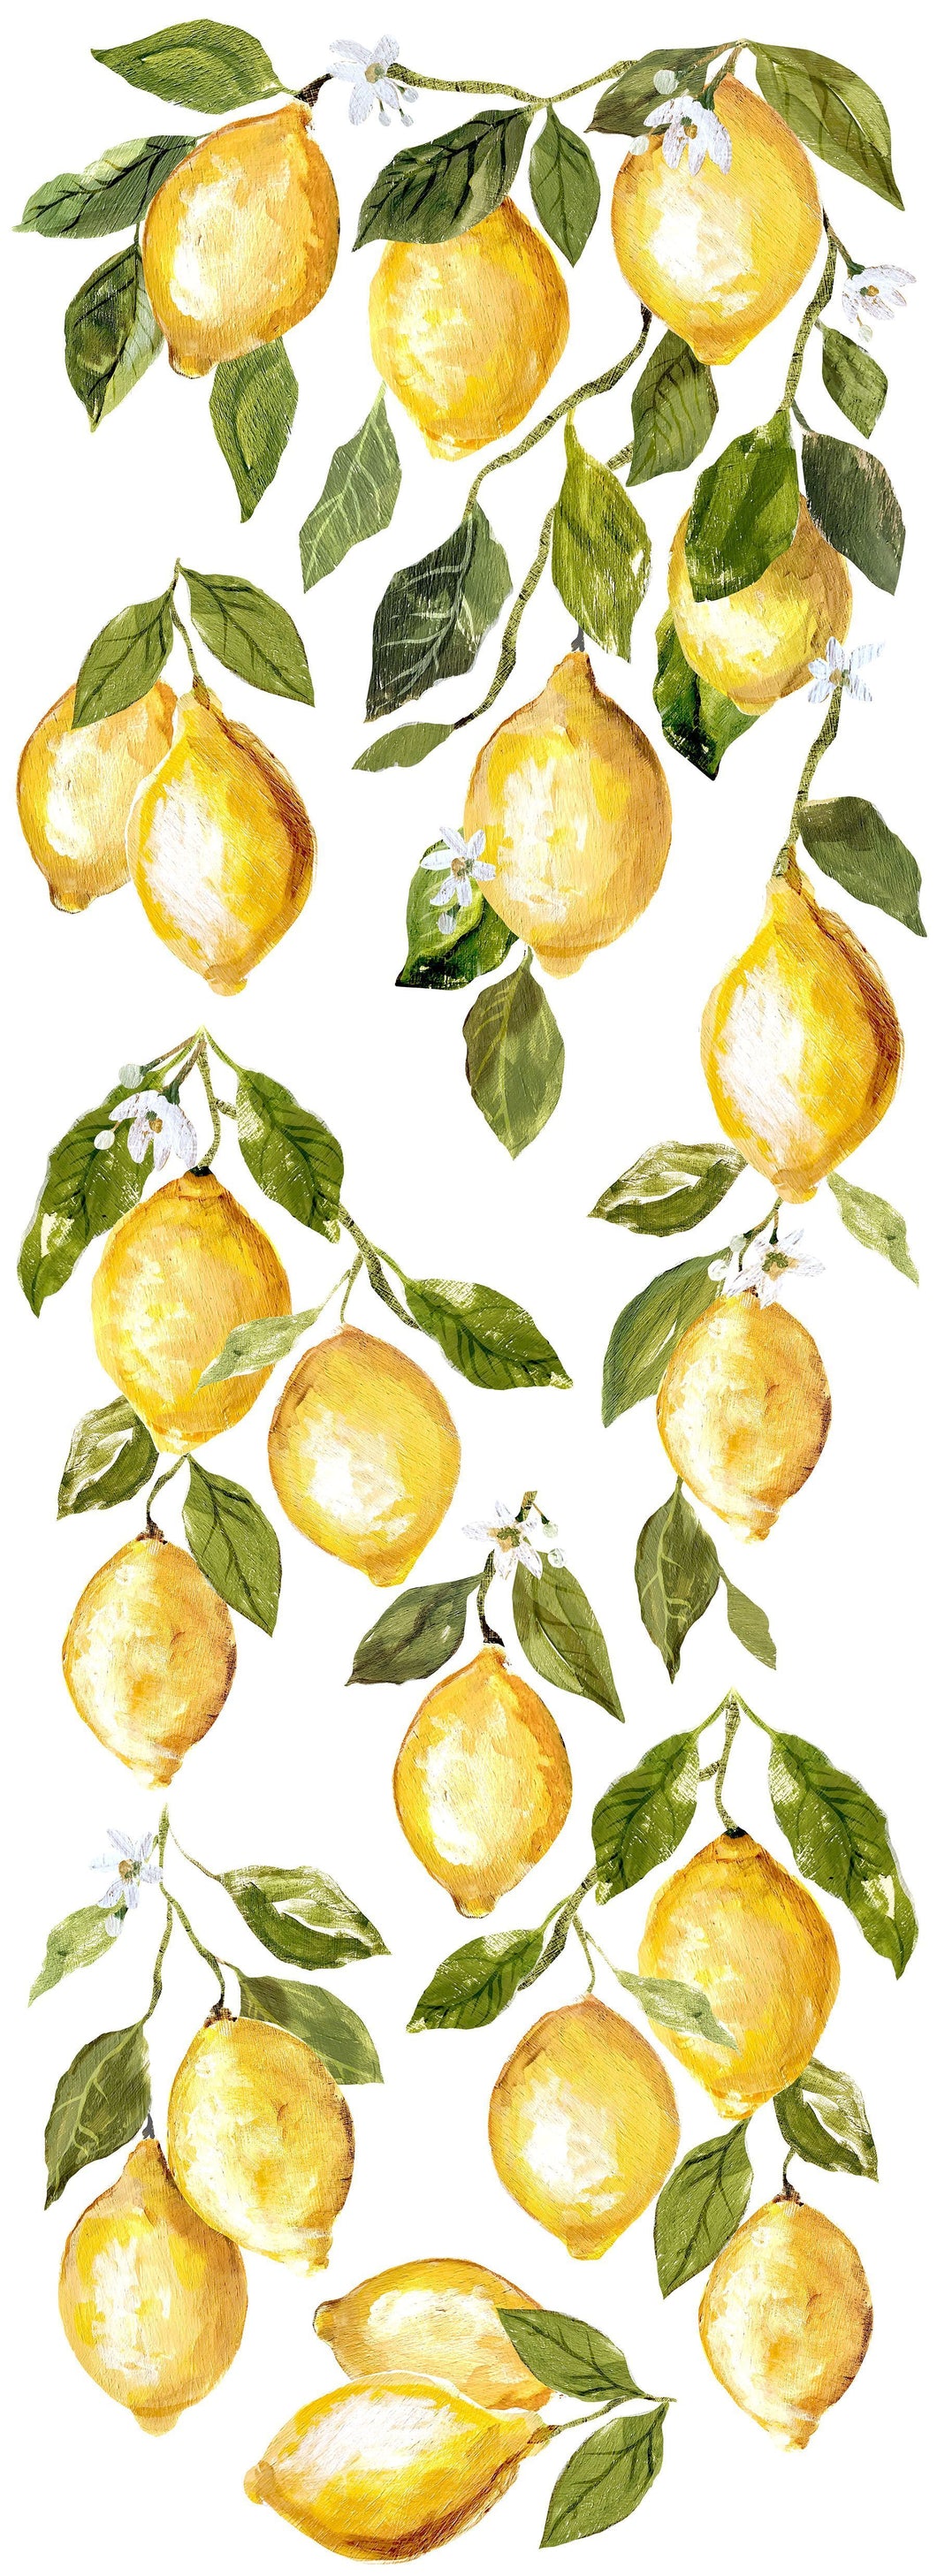 Lemon Drops Transfers - Iron Orchid Designs Transfers available at Lemon Tree Corners